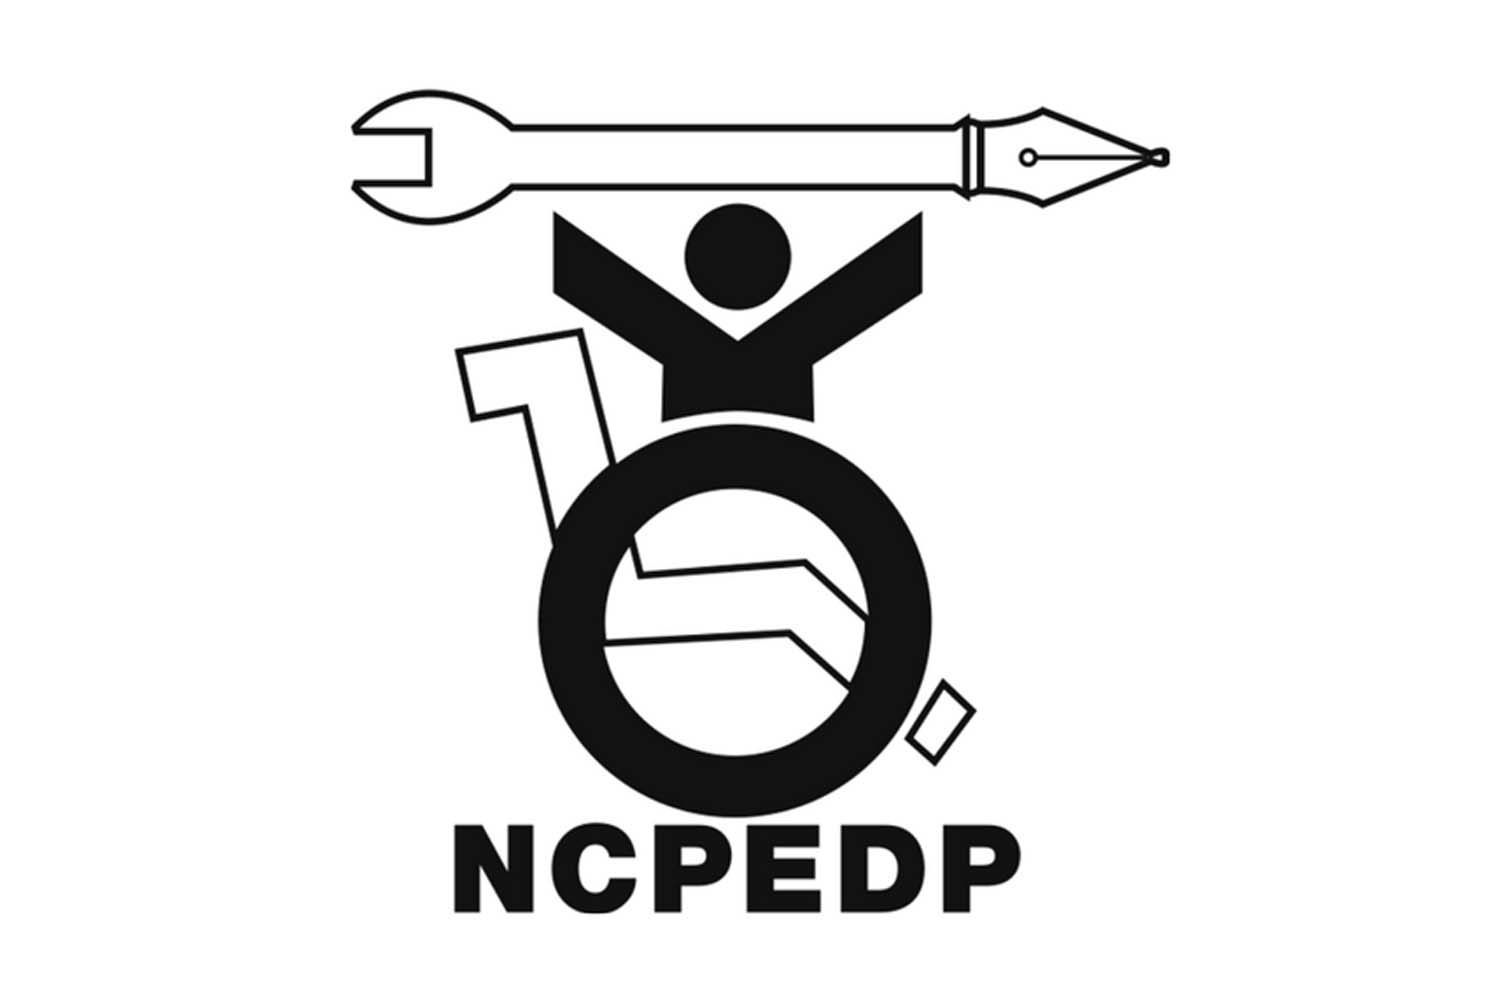 NCPEDP-Mindtree Helen Keller Awards 2021: Nominations Open Until October 25 2021